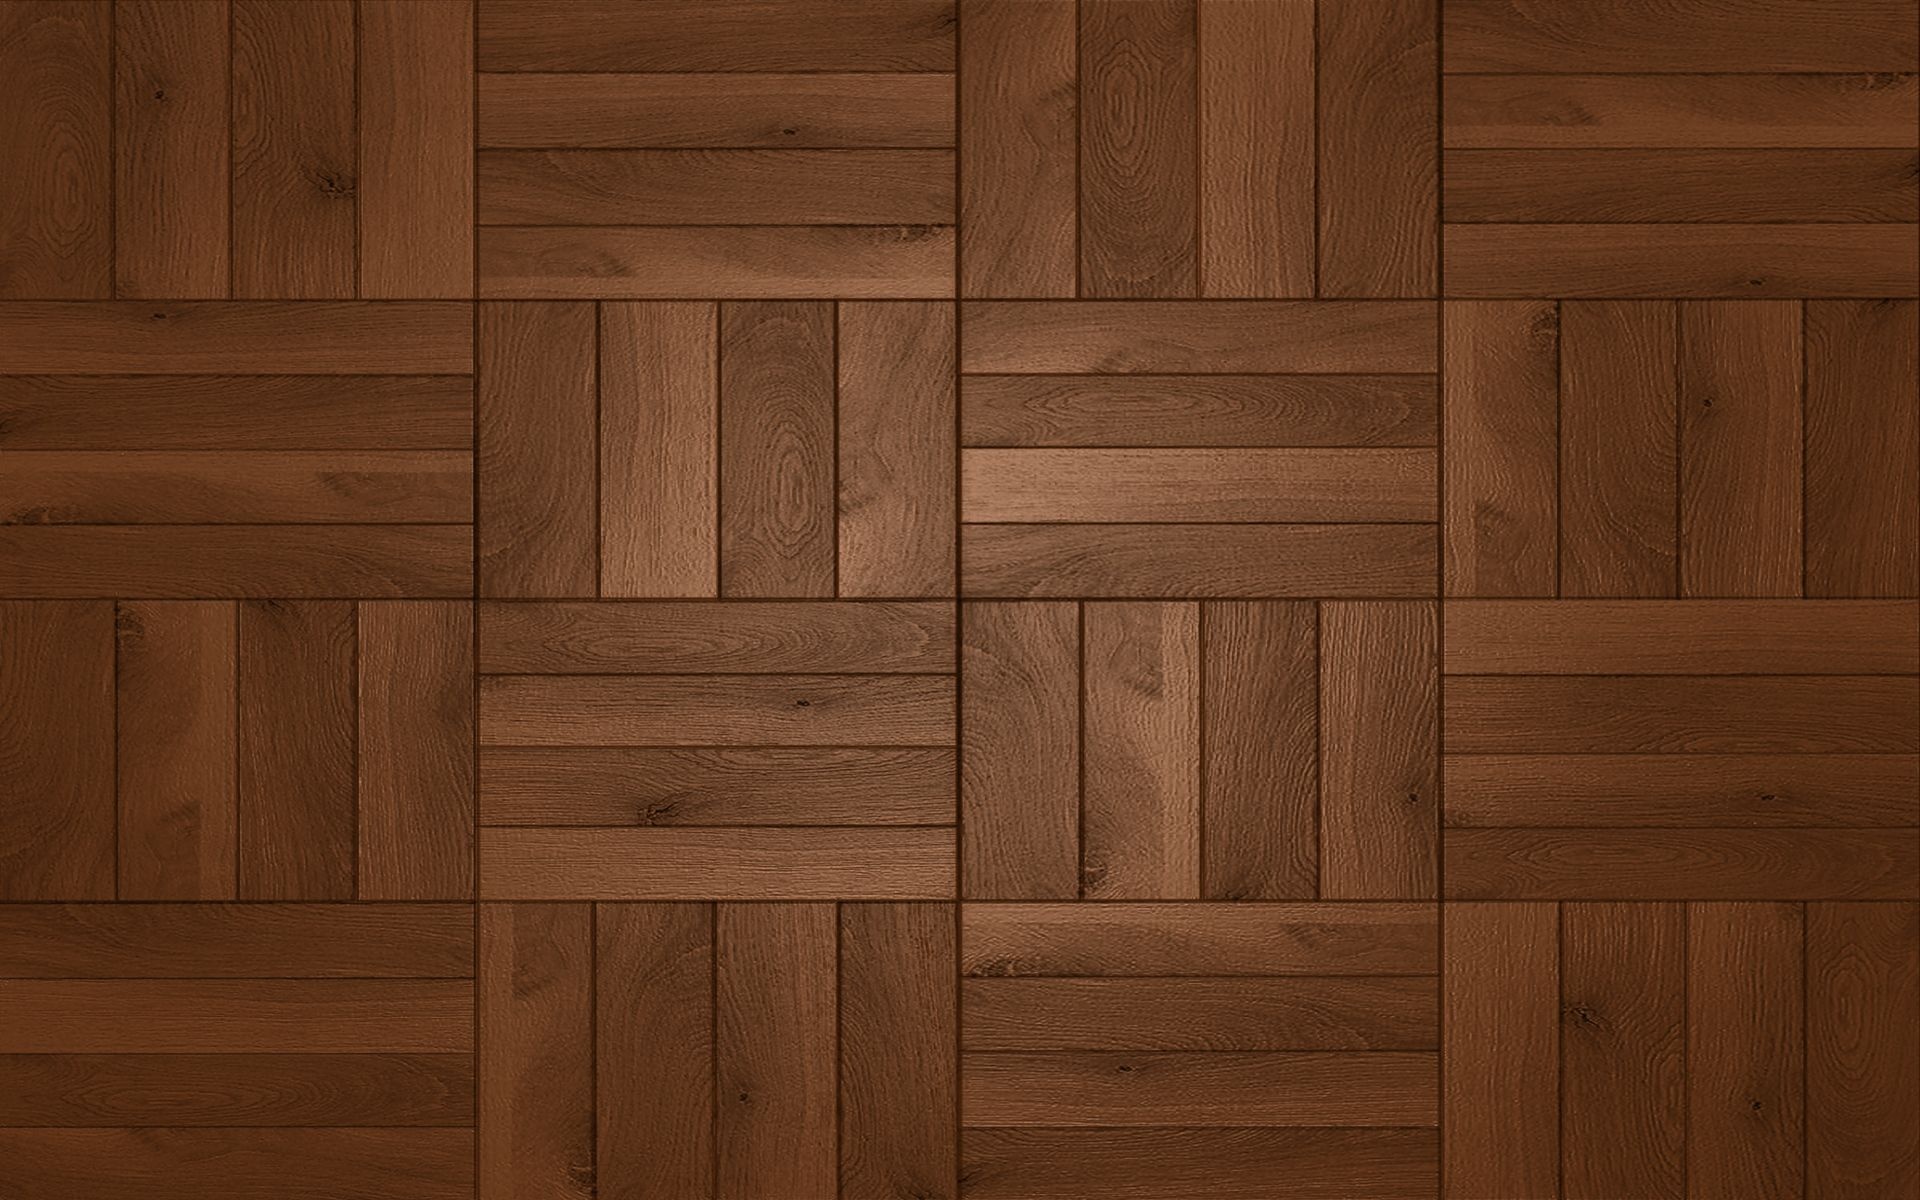 Hardwood floor texture, Wood panel pattern, Brown hues, Natural grain, 1920x1200 HD Desktop